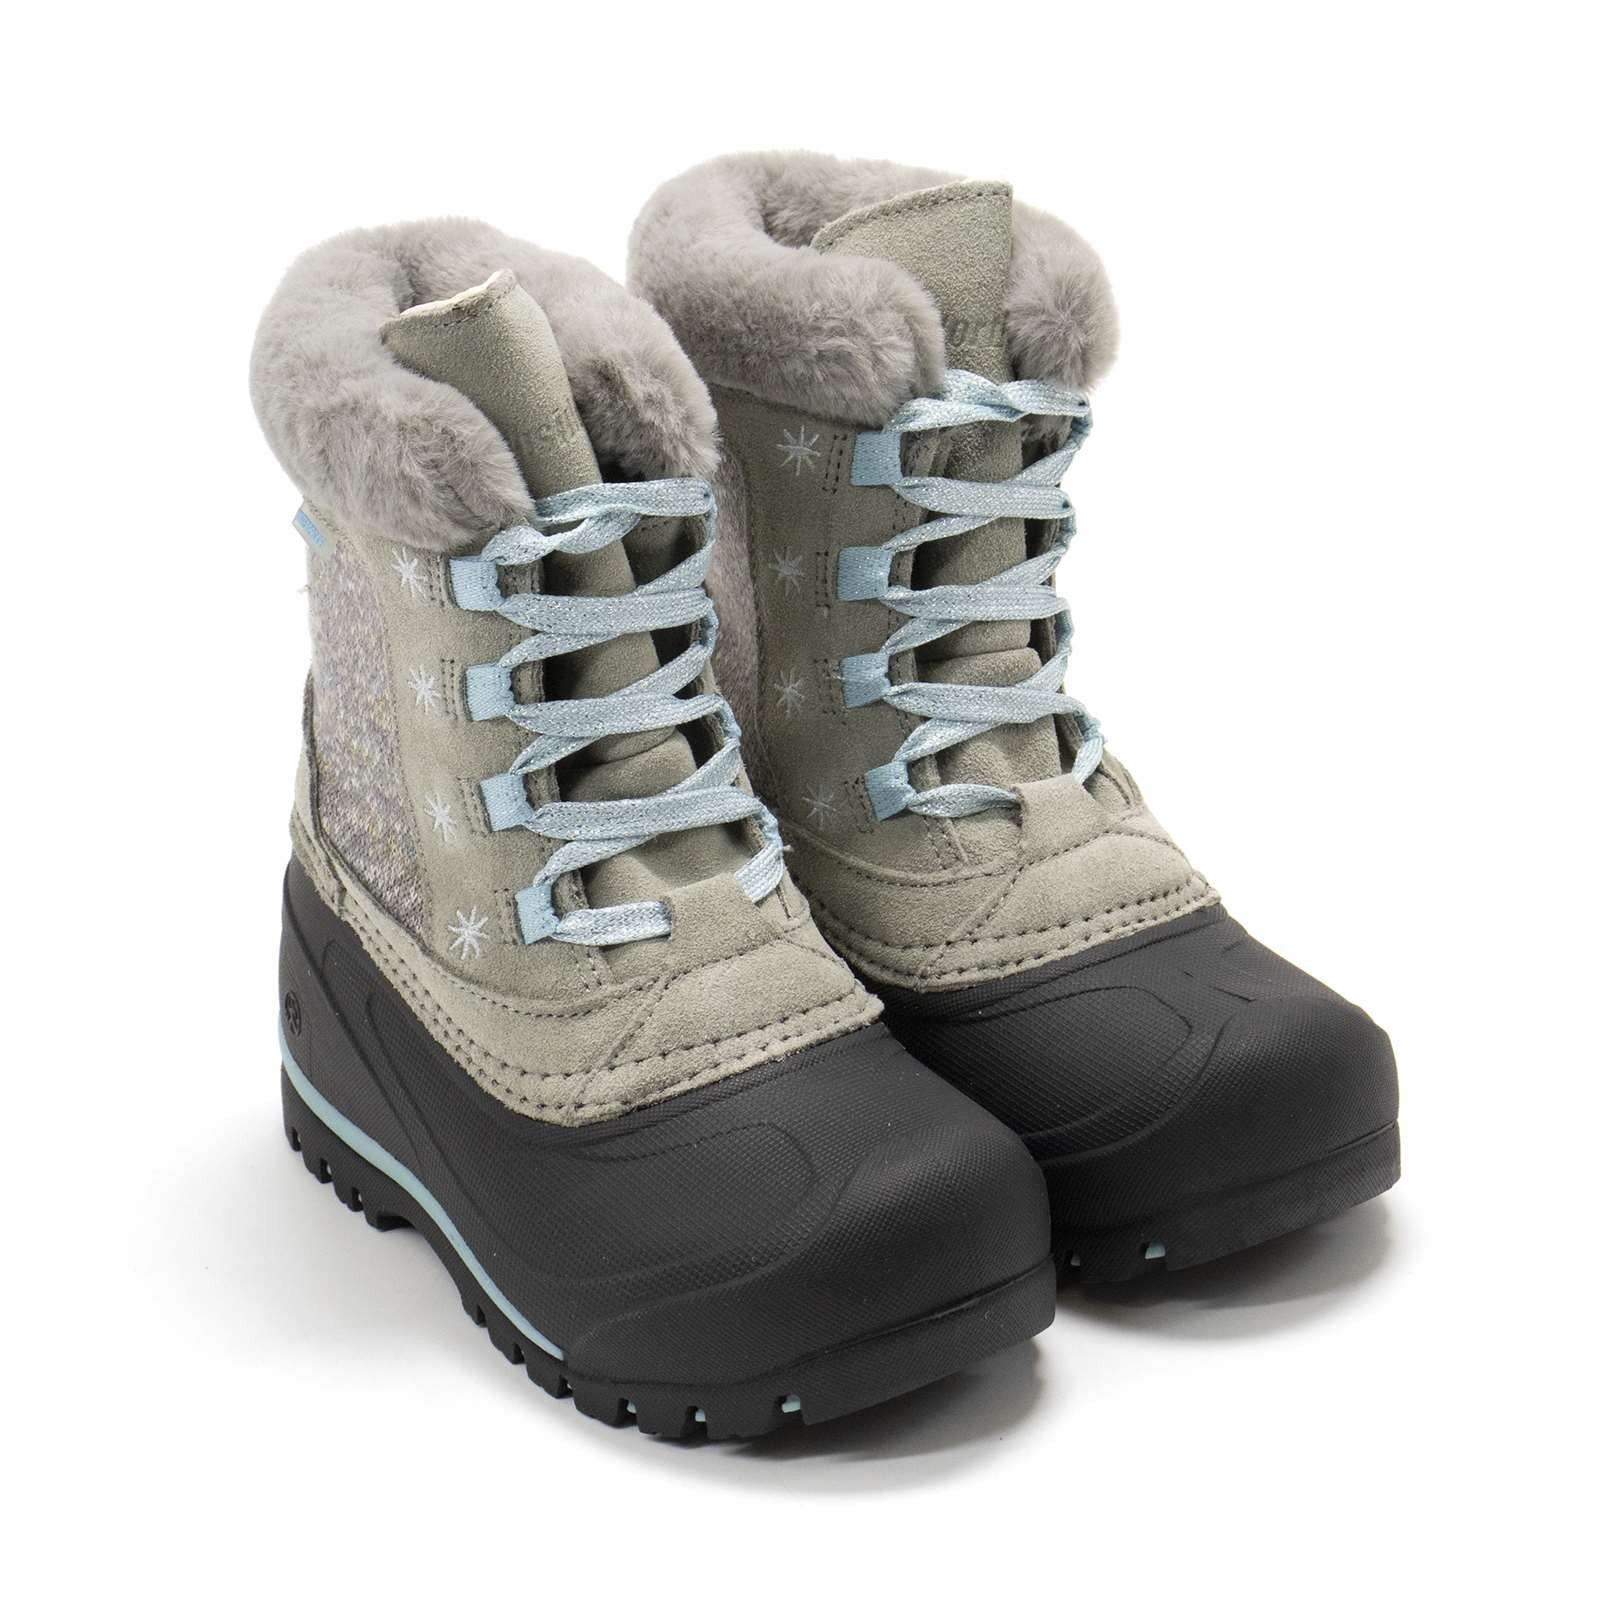 Northside SNOWBIRD Girls 918149G069 Lt Grey/Aqua 200 Grams Waterproof Boots 